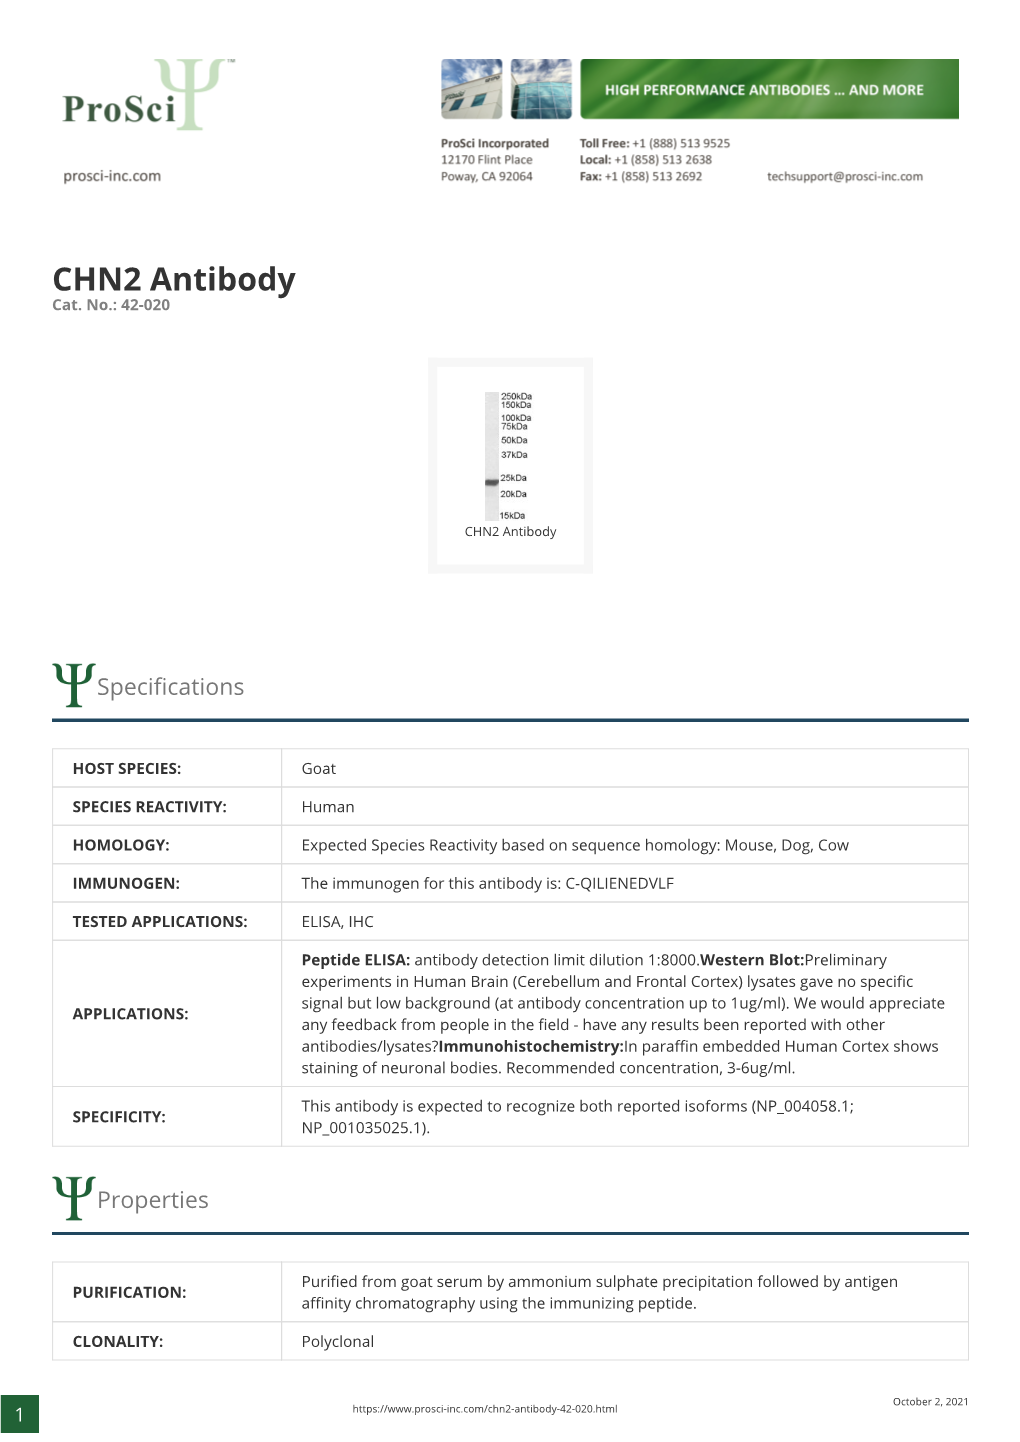 CHN2 Antibody Cat